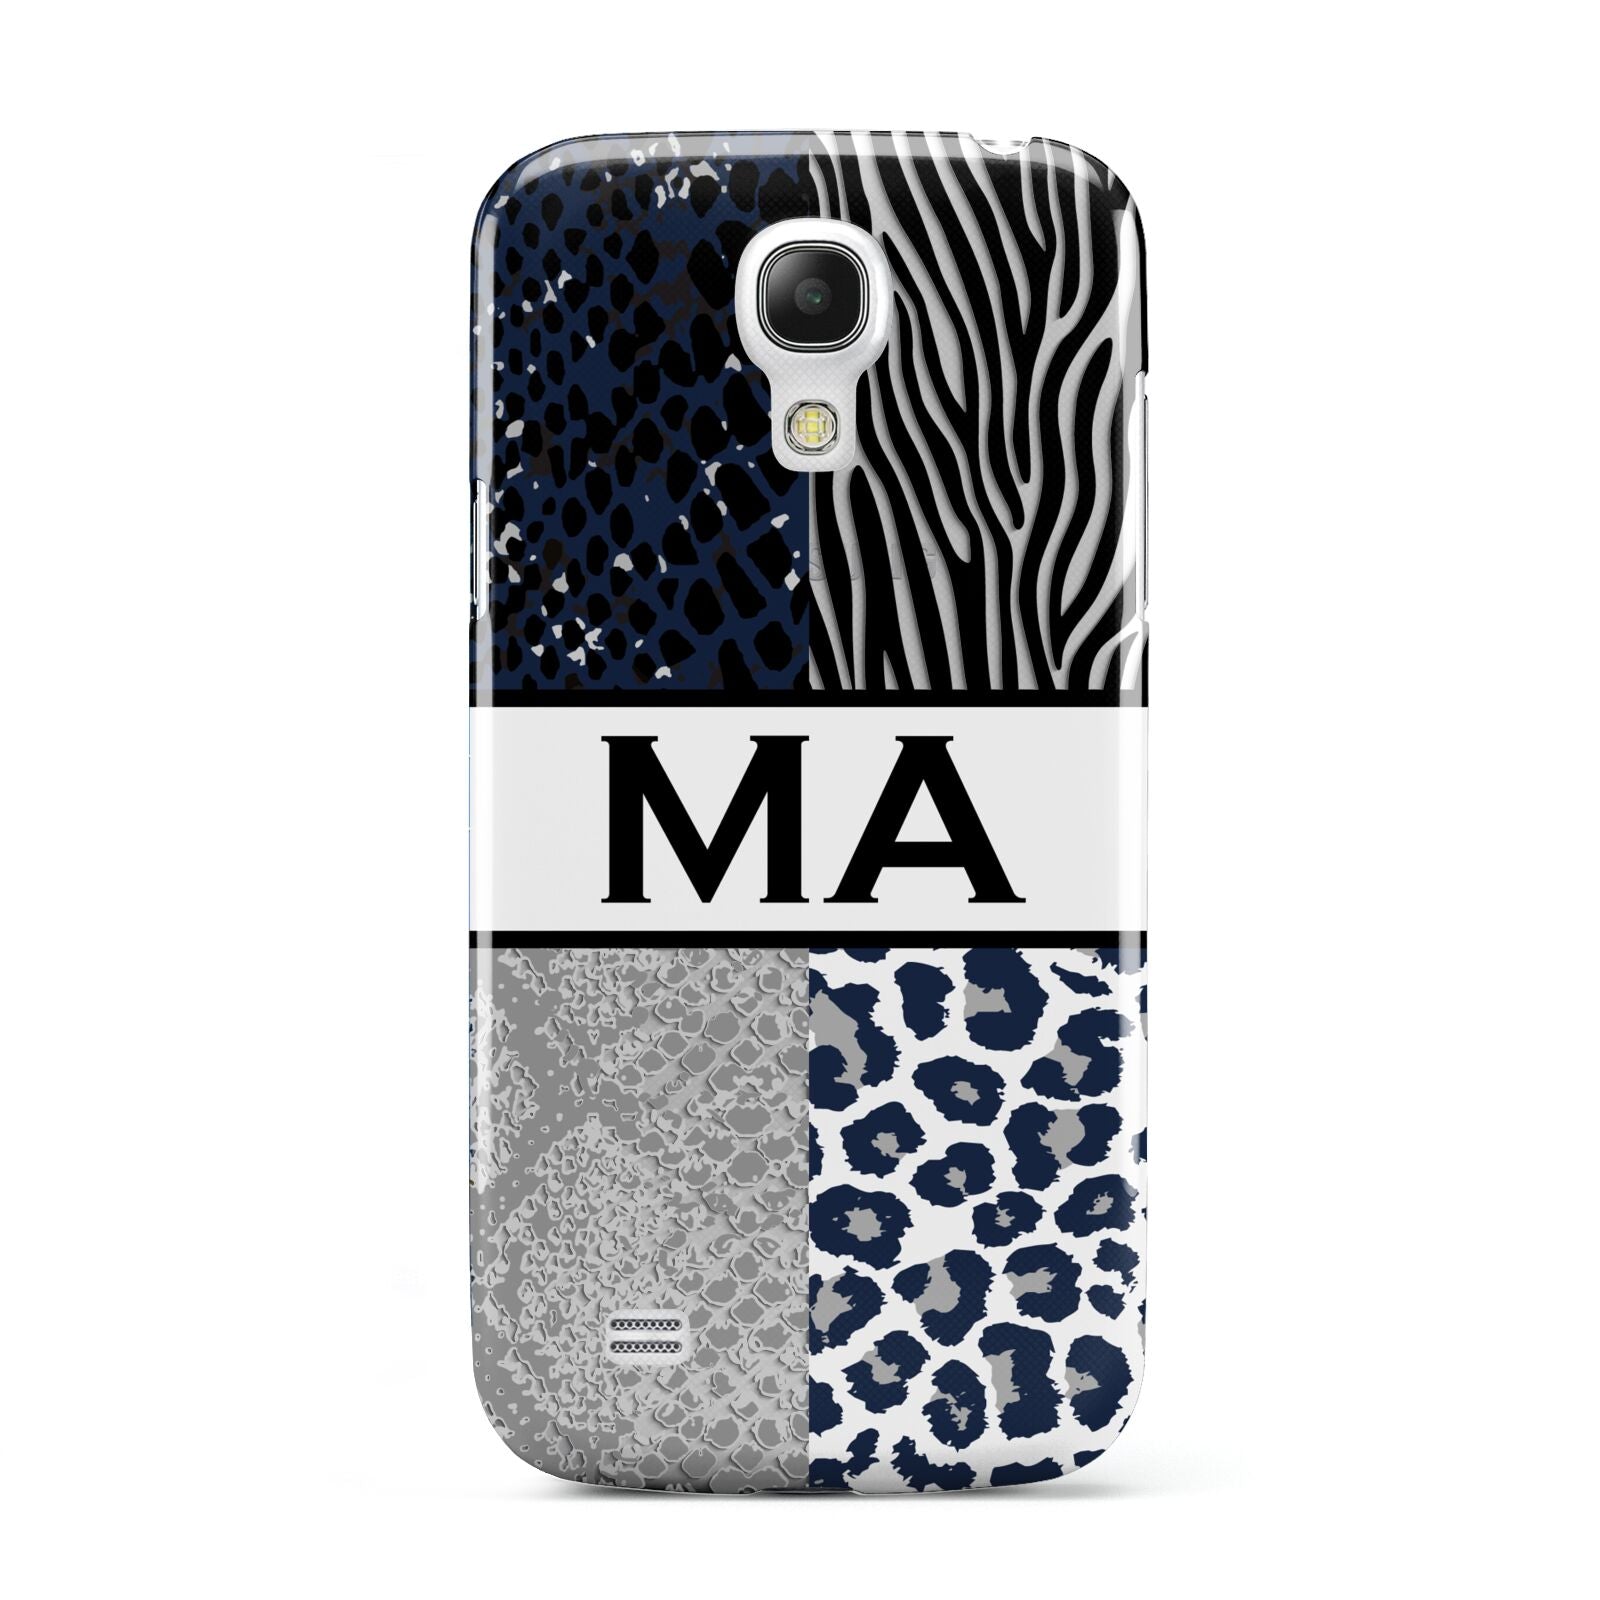 Personalised Animal Print Samsung Galaxy S4 Mini Case